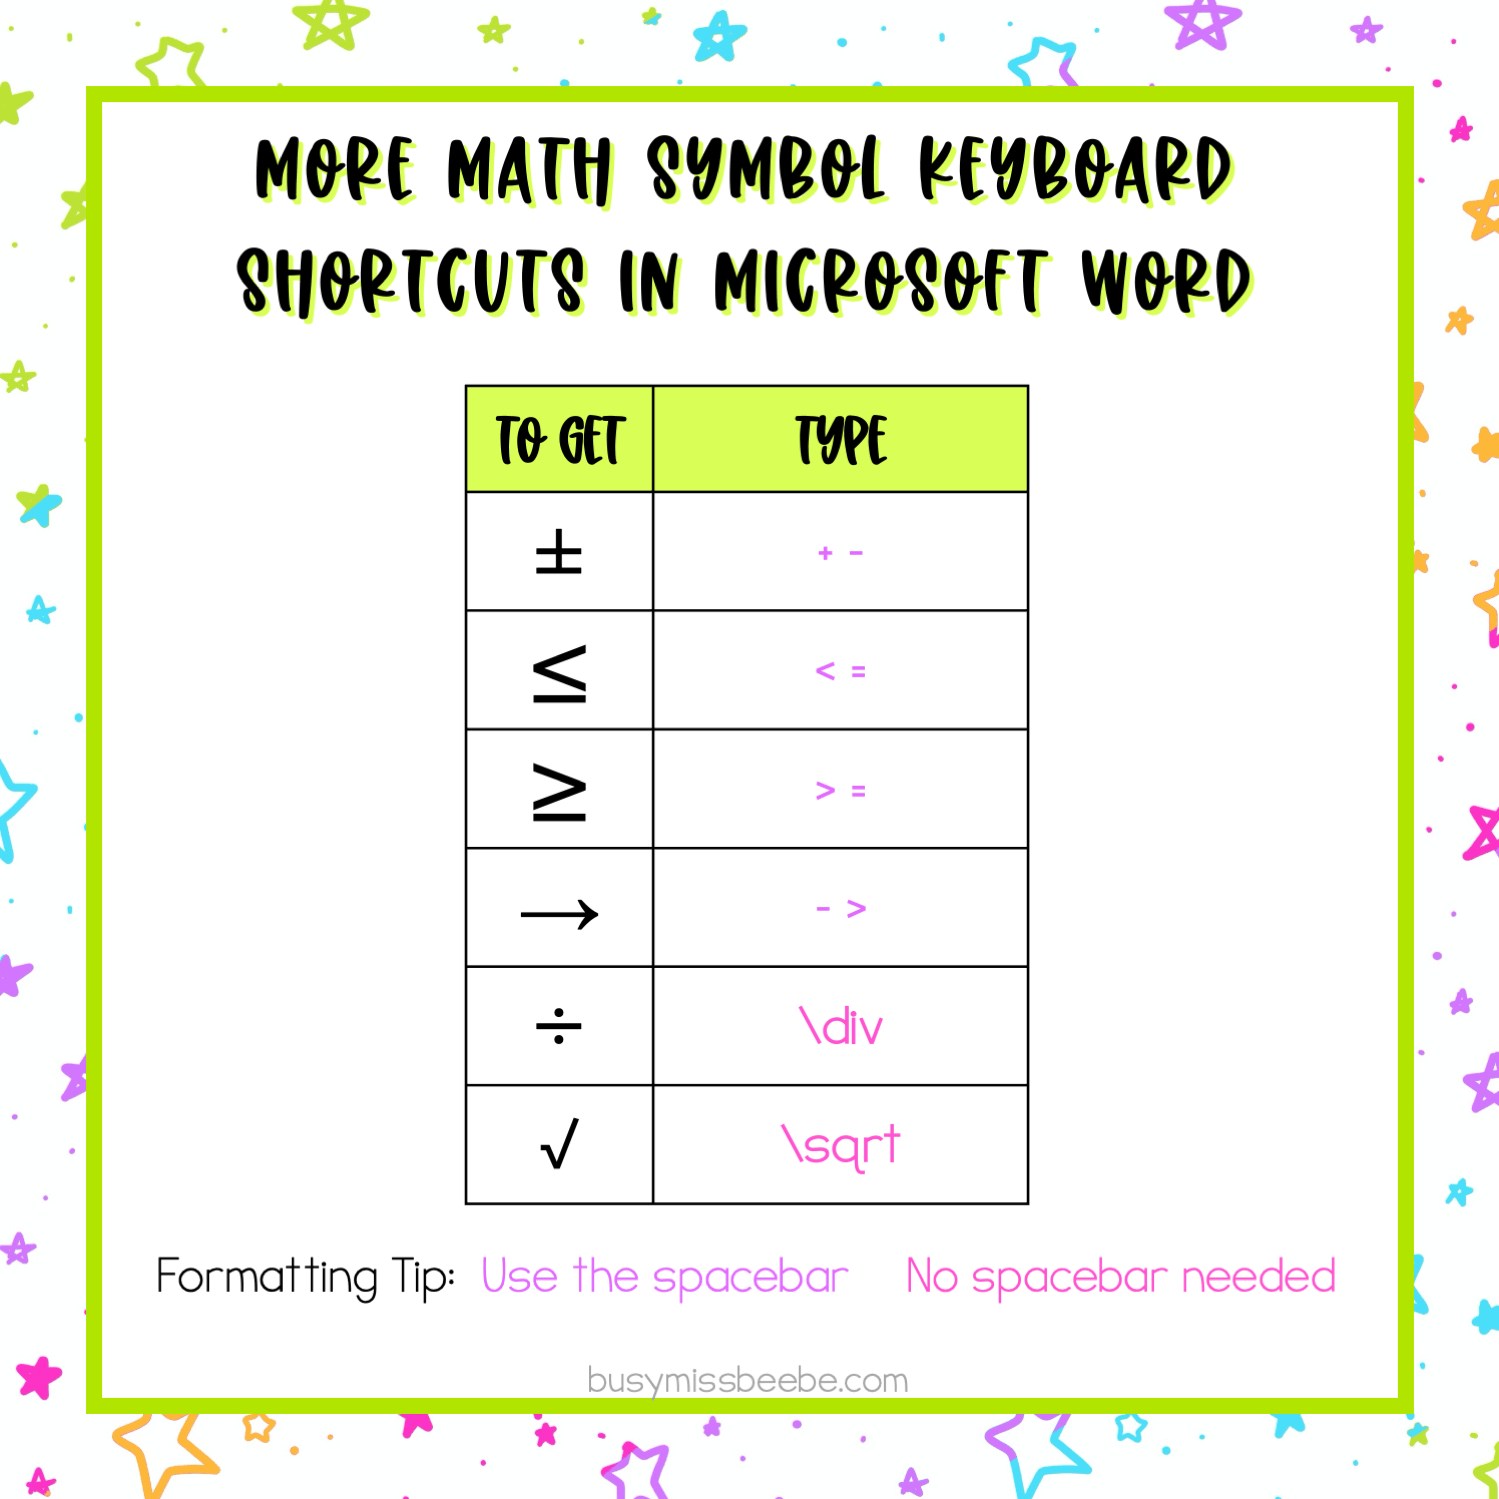 Math Symbol Keyboard Shortcuts Teachers Microsoft Word 